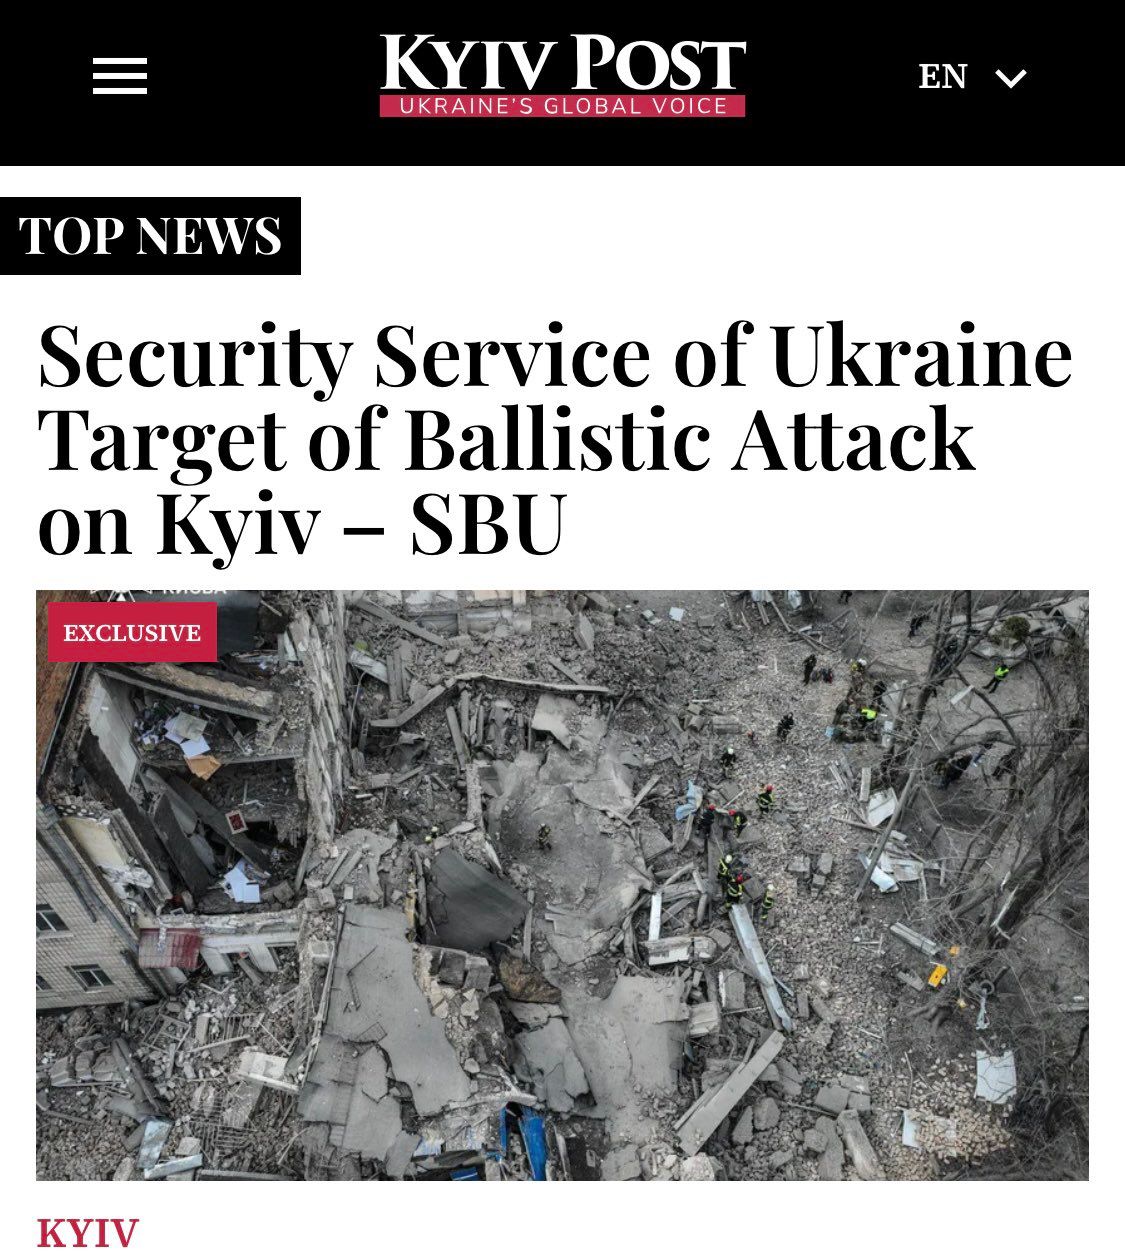 kyiv-post-sbu-attacked.jpg